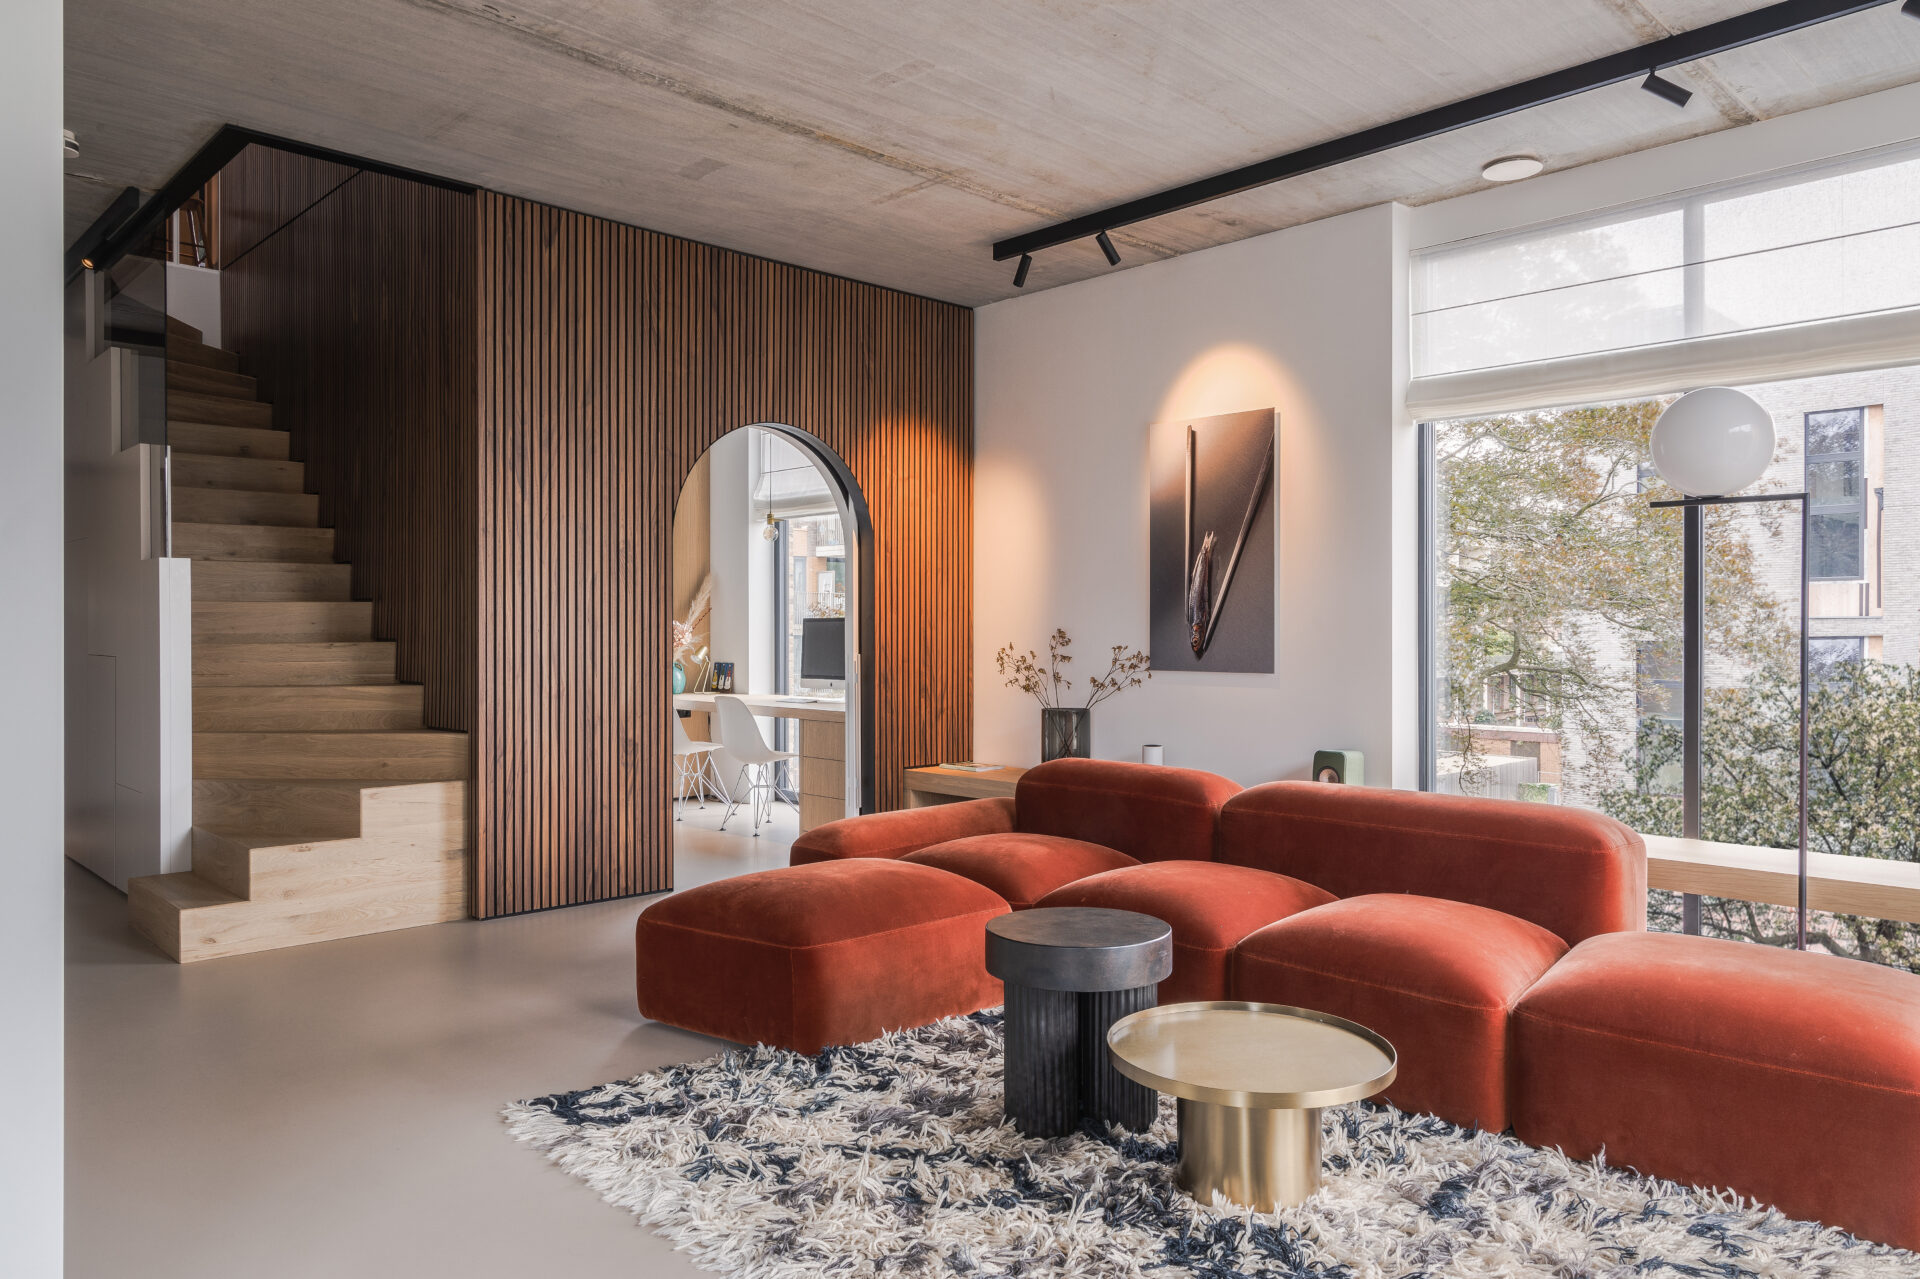 Residential house furnishing | Amsterdam (NL) - Residential Interior Design